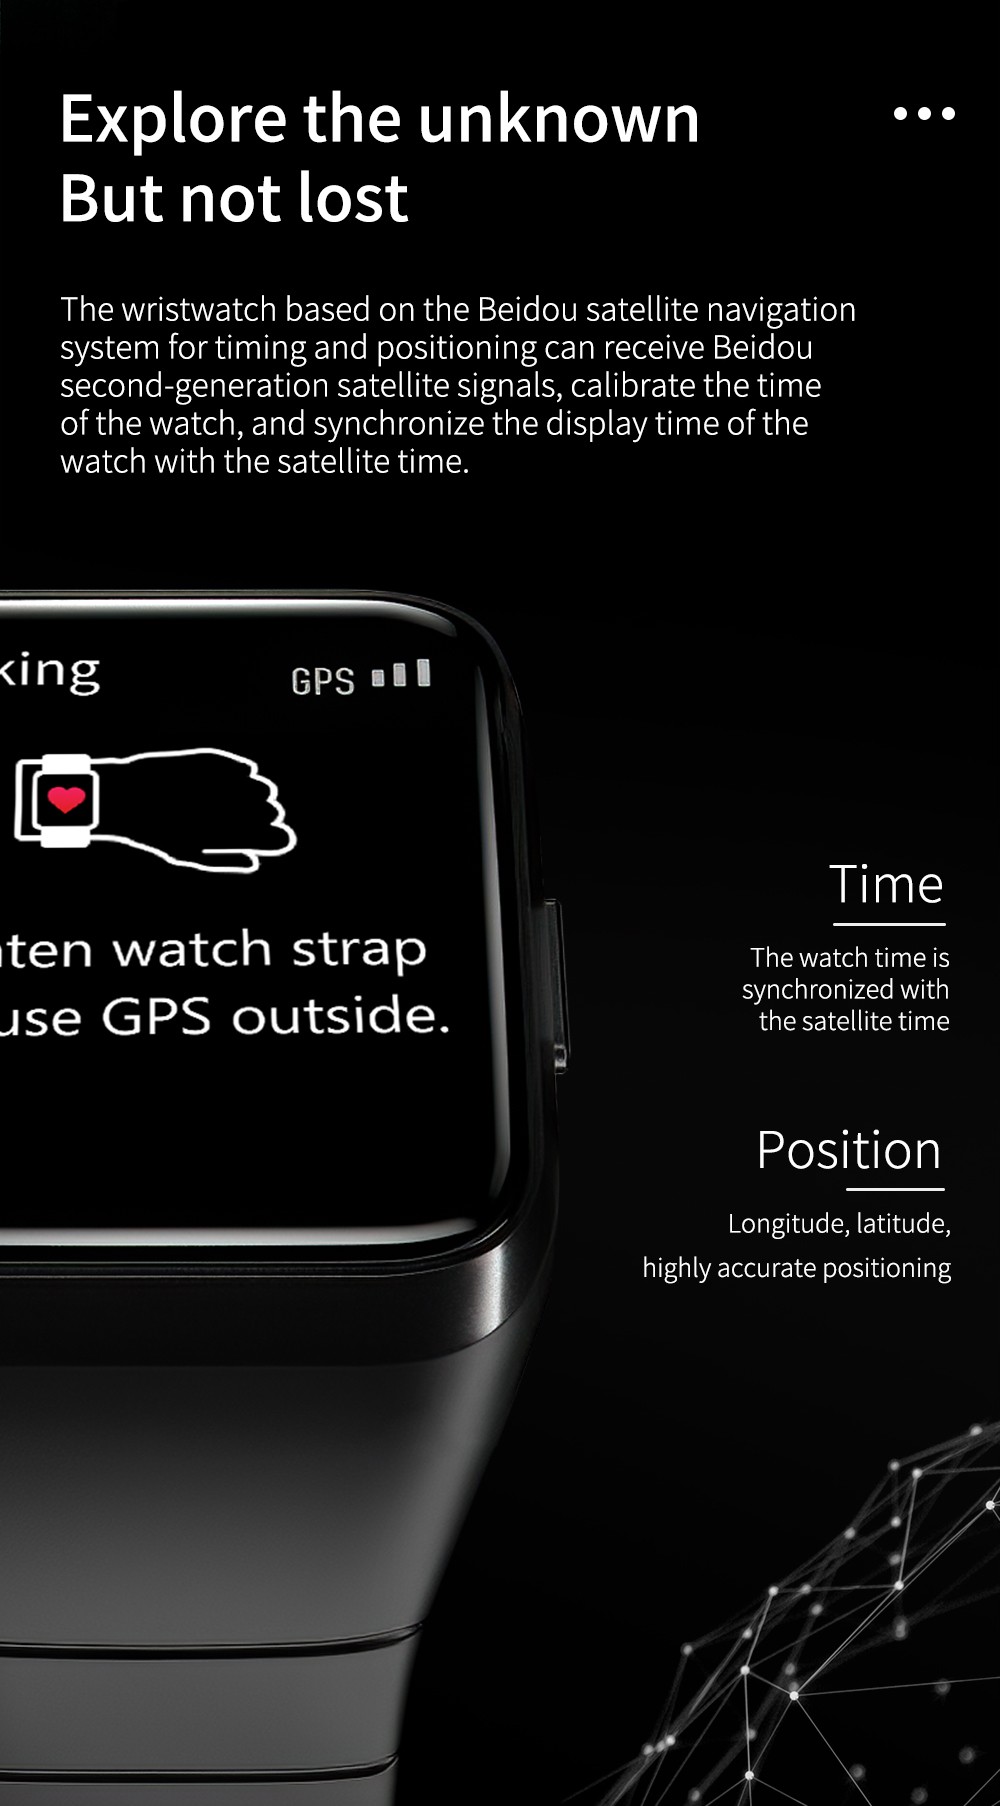 LOKMAT ZEUS 2 Smartwatch 1.69'' TFT Full Touch Screen GPS Sport Bracelet Heart Rate, Blood Oxygen Monitor - Red